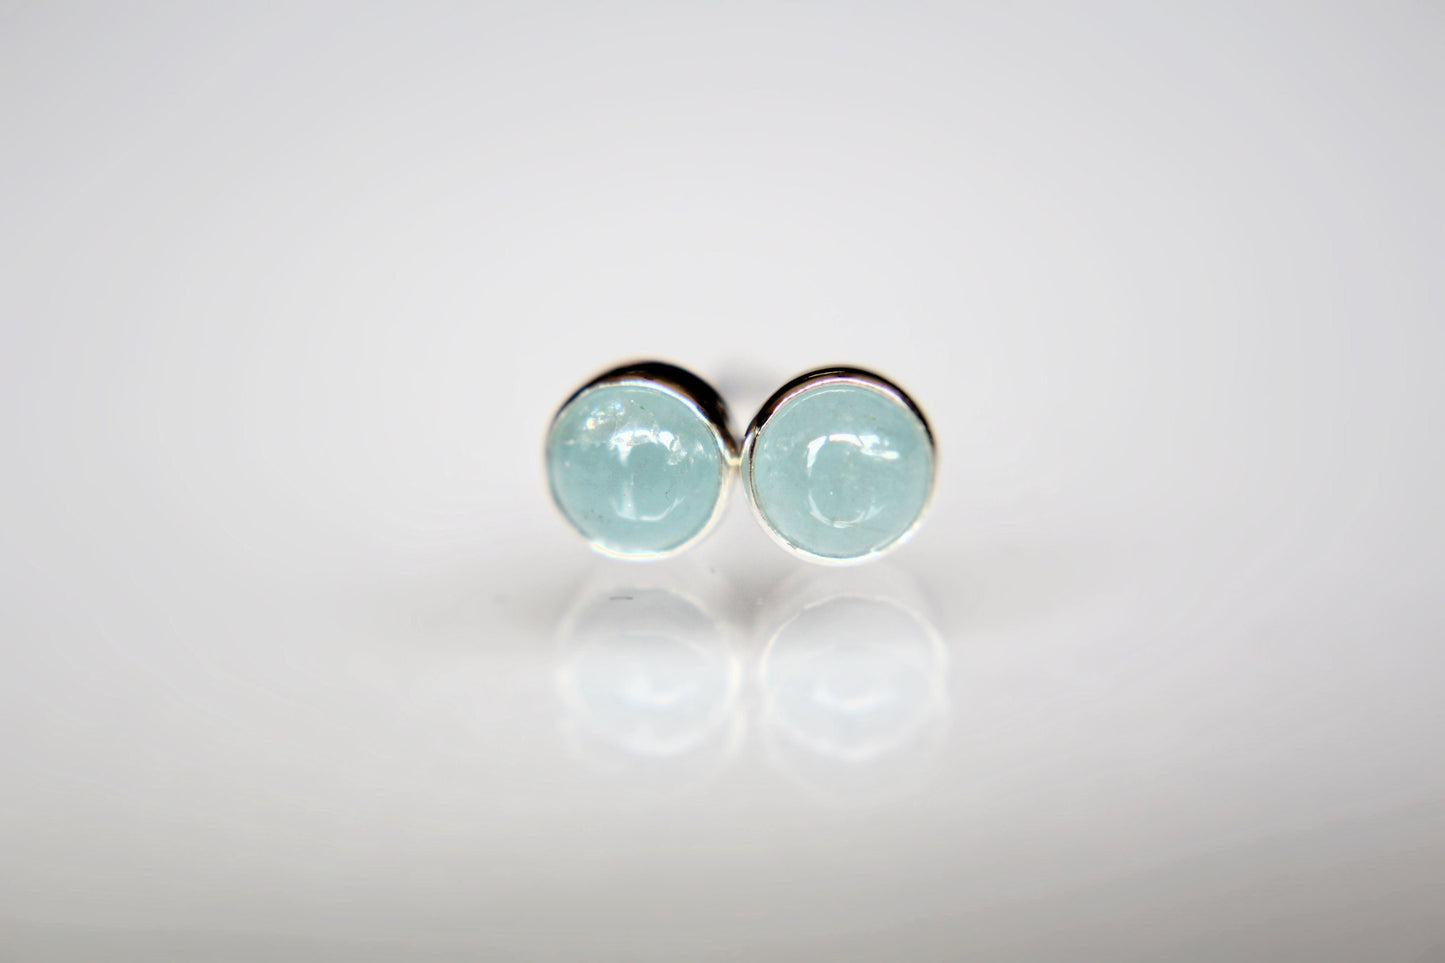 Aquamarine Earrings, Gemstone Earrings, Sterling Earrings, Post Earrings, Pale Blue Post Earrings, Small Earrings, Minimalist Earrings, Gift